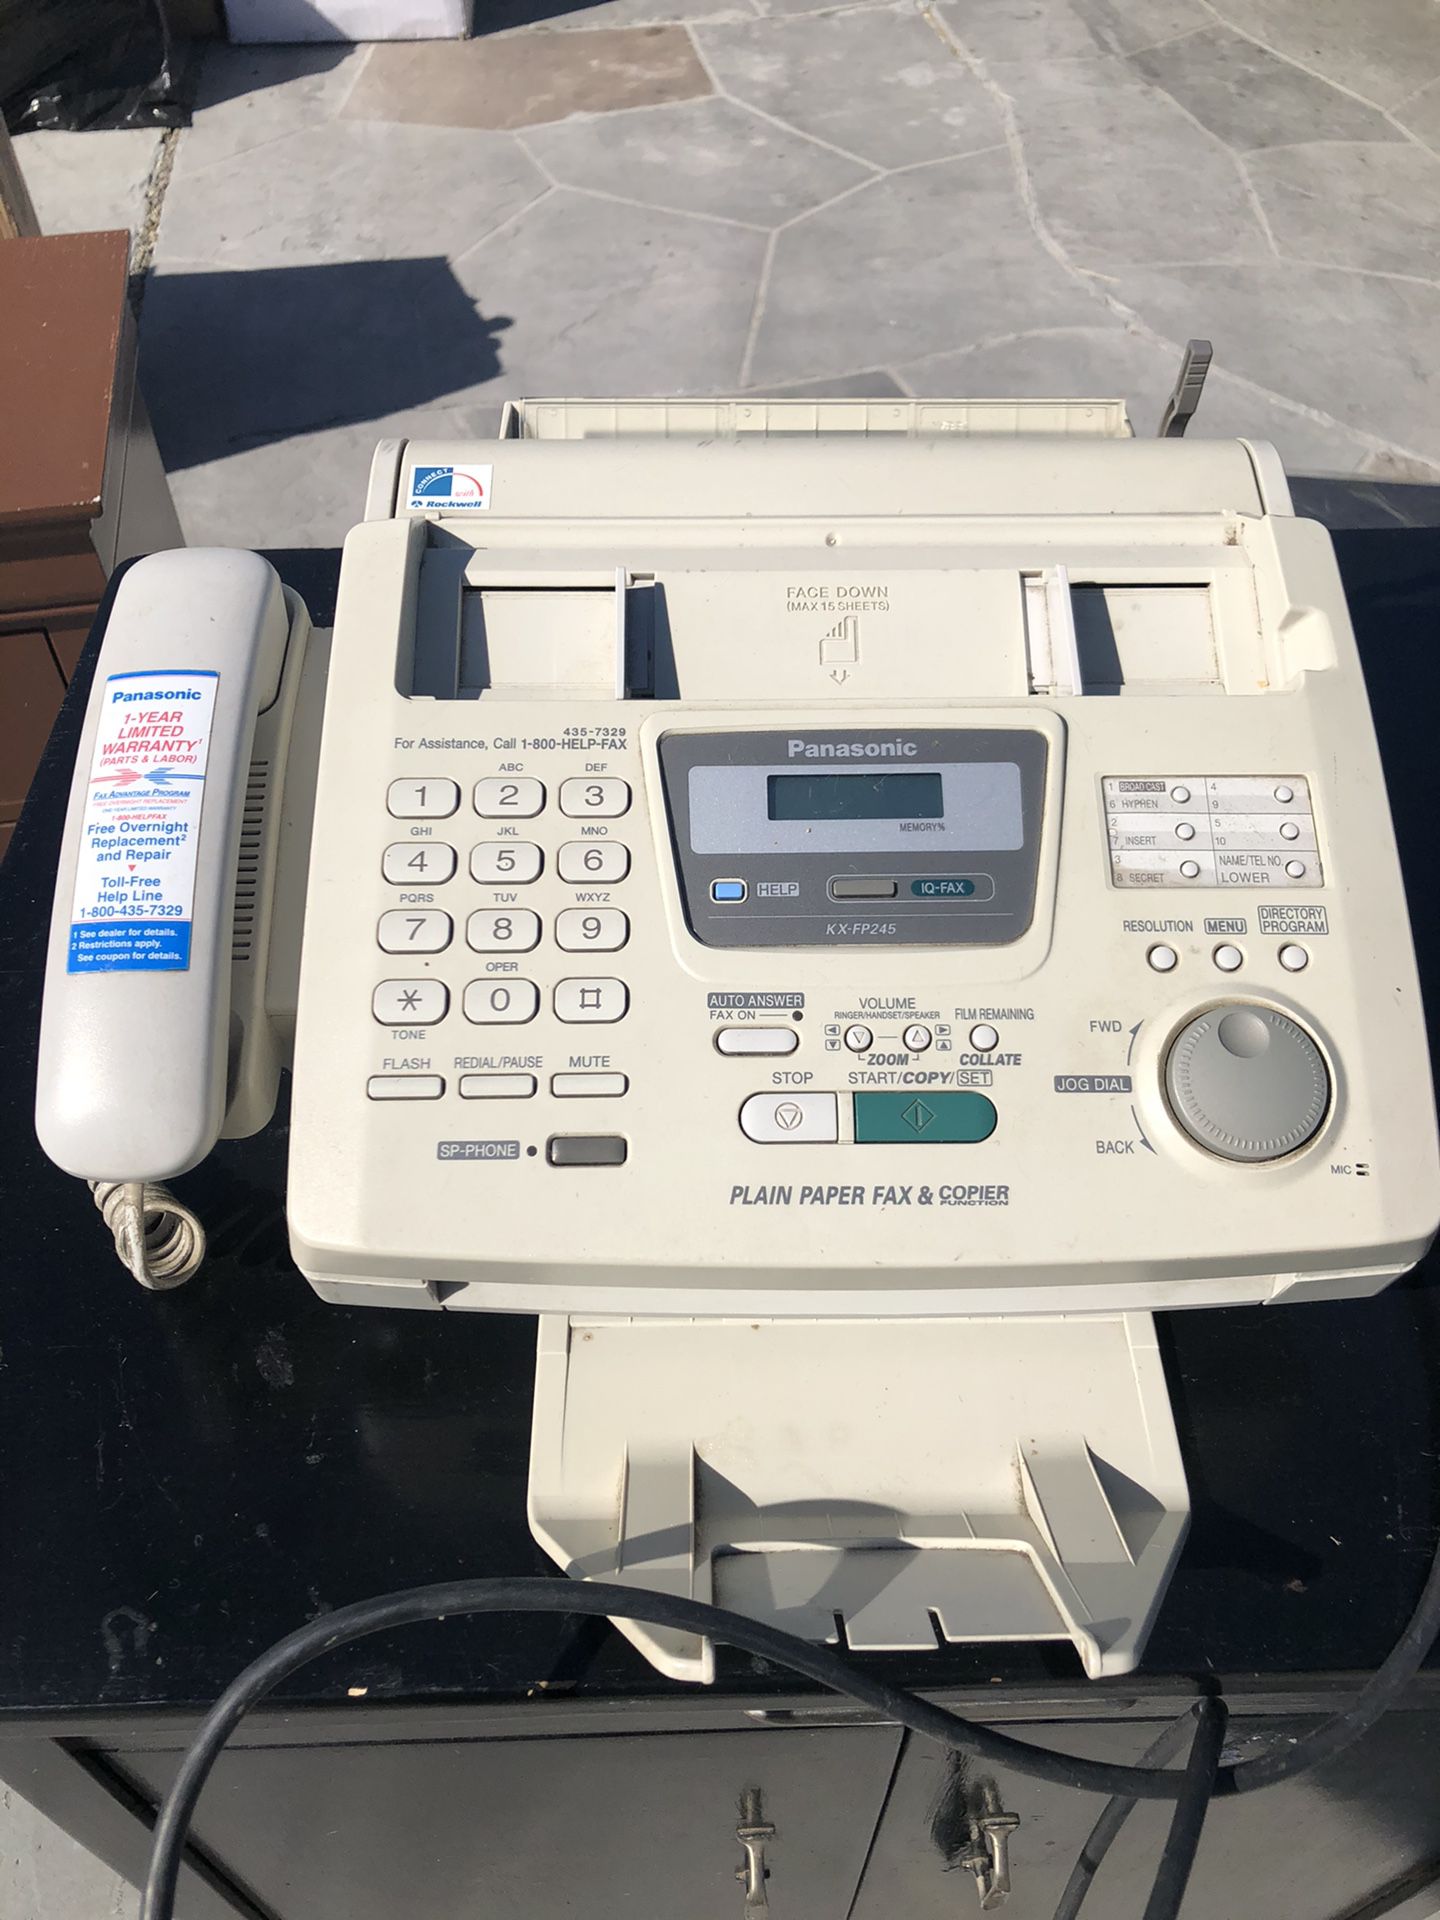 Phone/fax/printer/copier